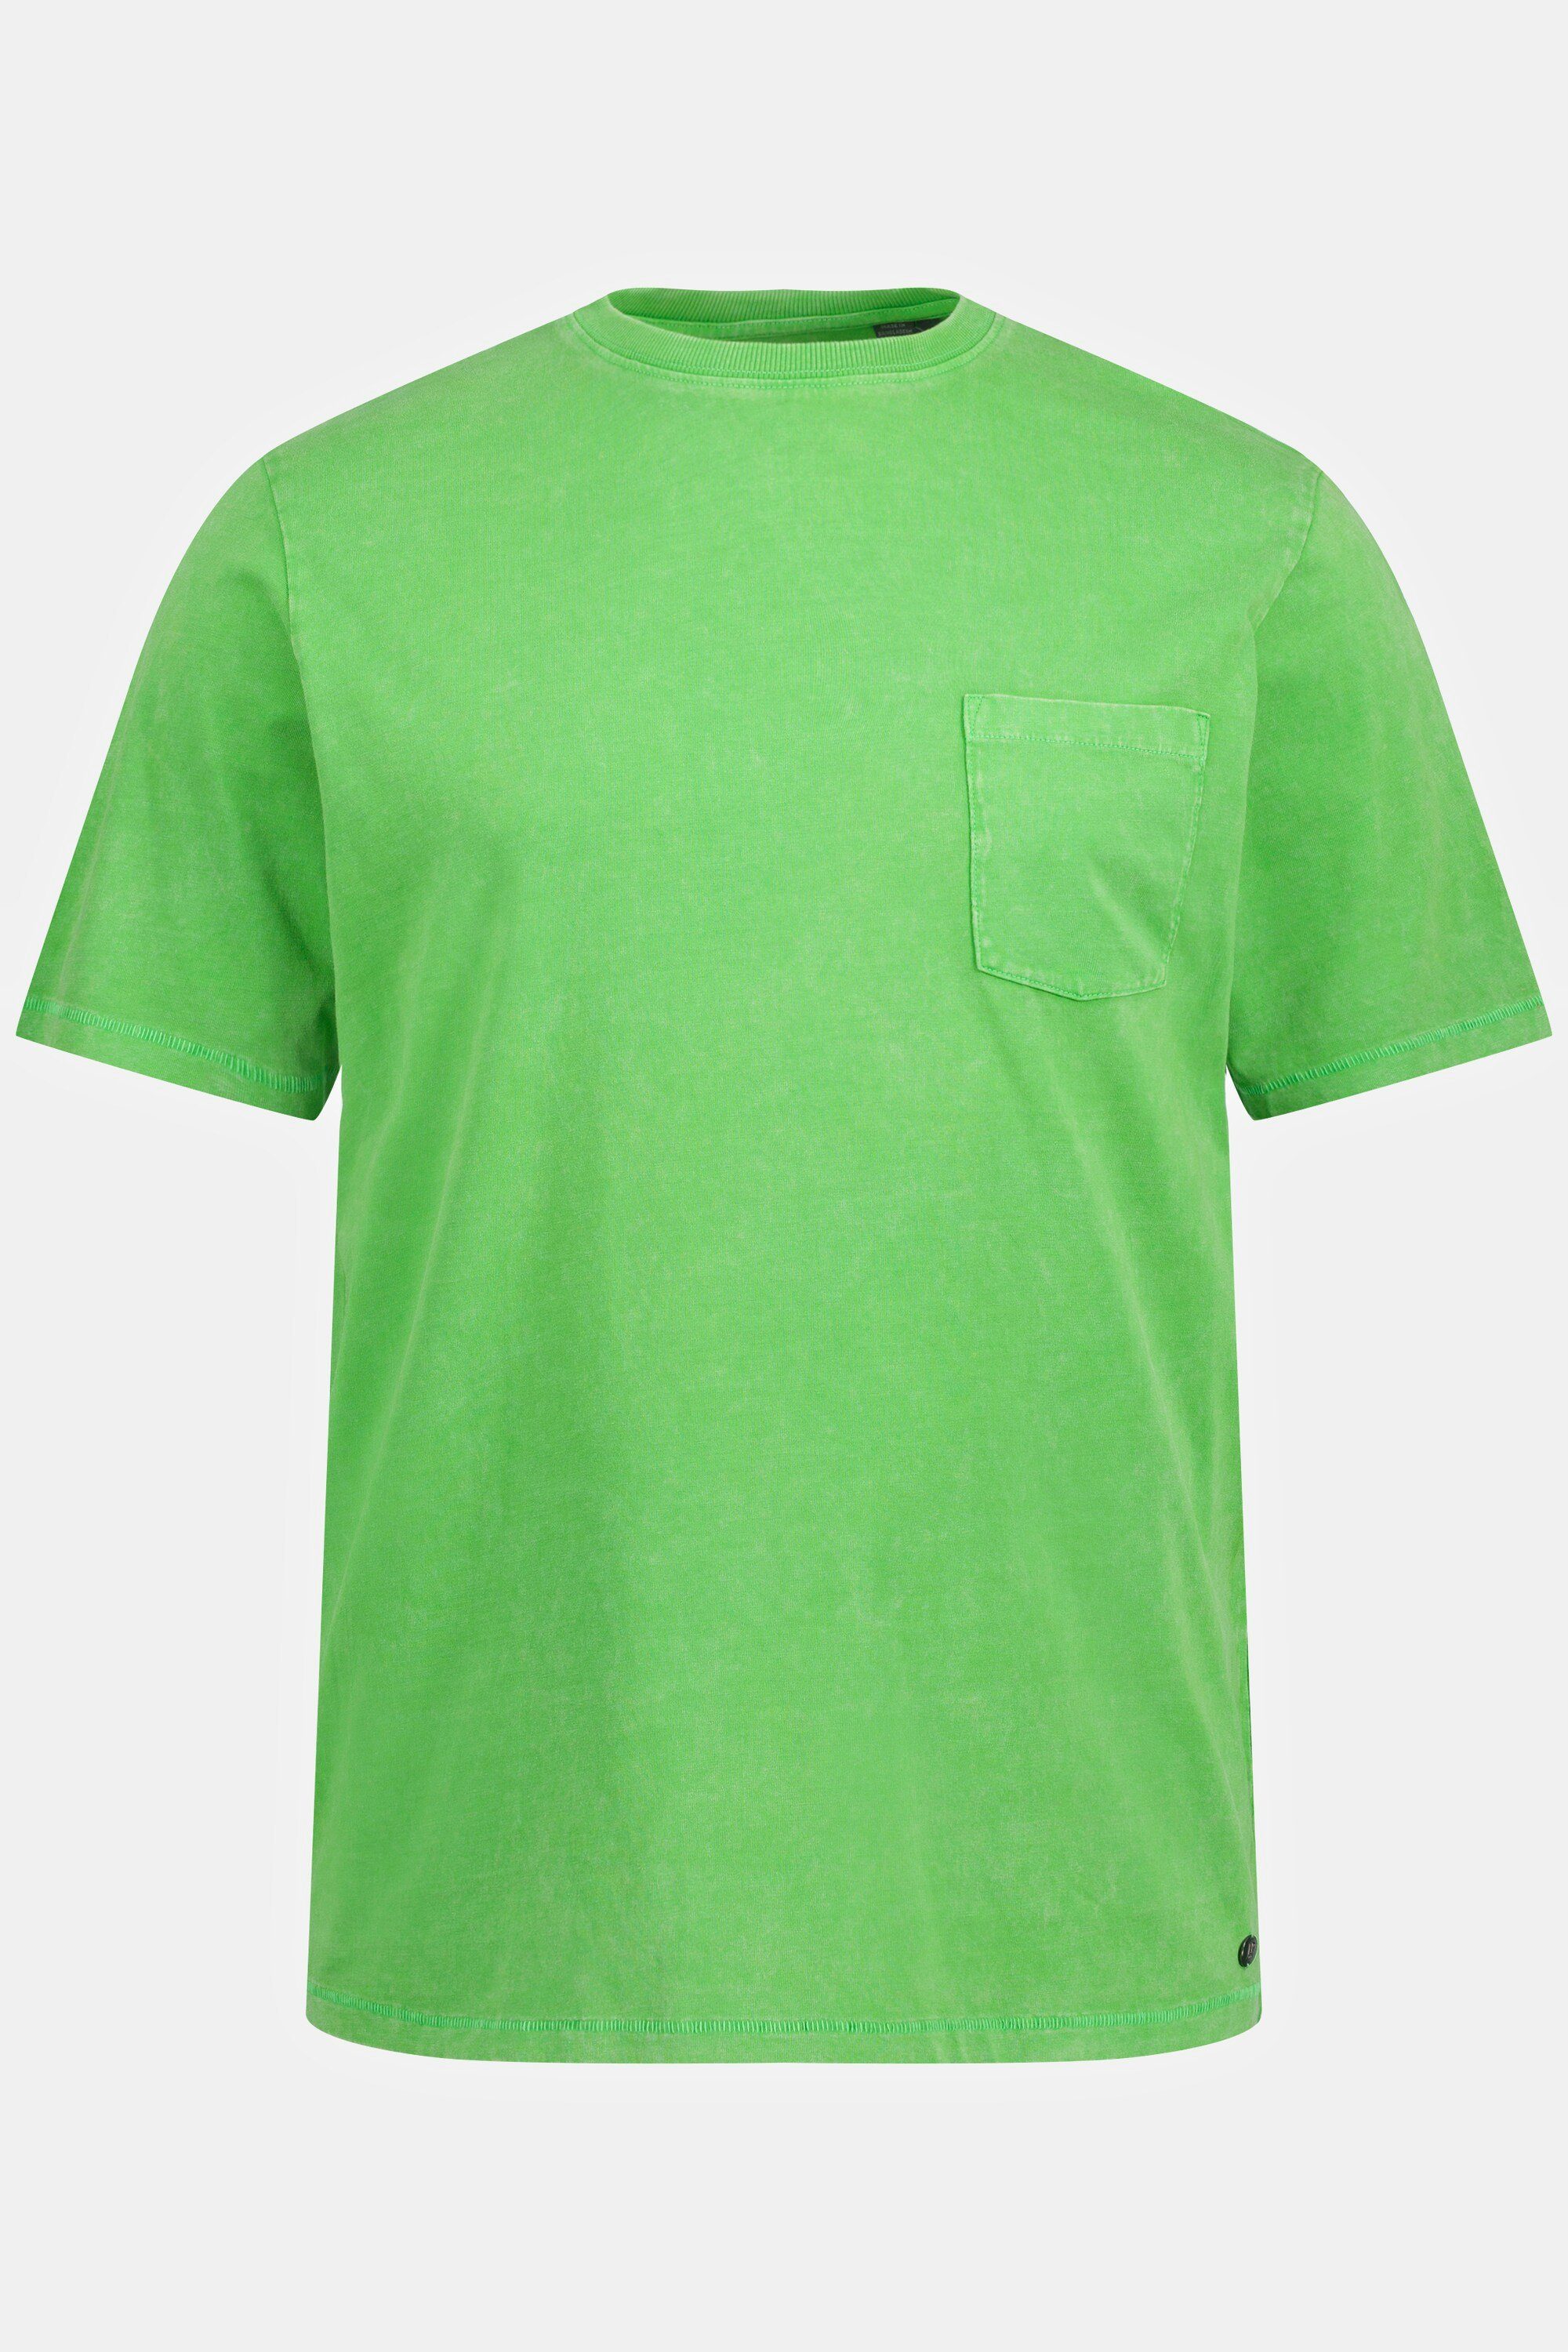 T-Shirt Biobaumwolle acid apfelgrün T-Shirt JP1880 washed Flammjersey